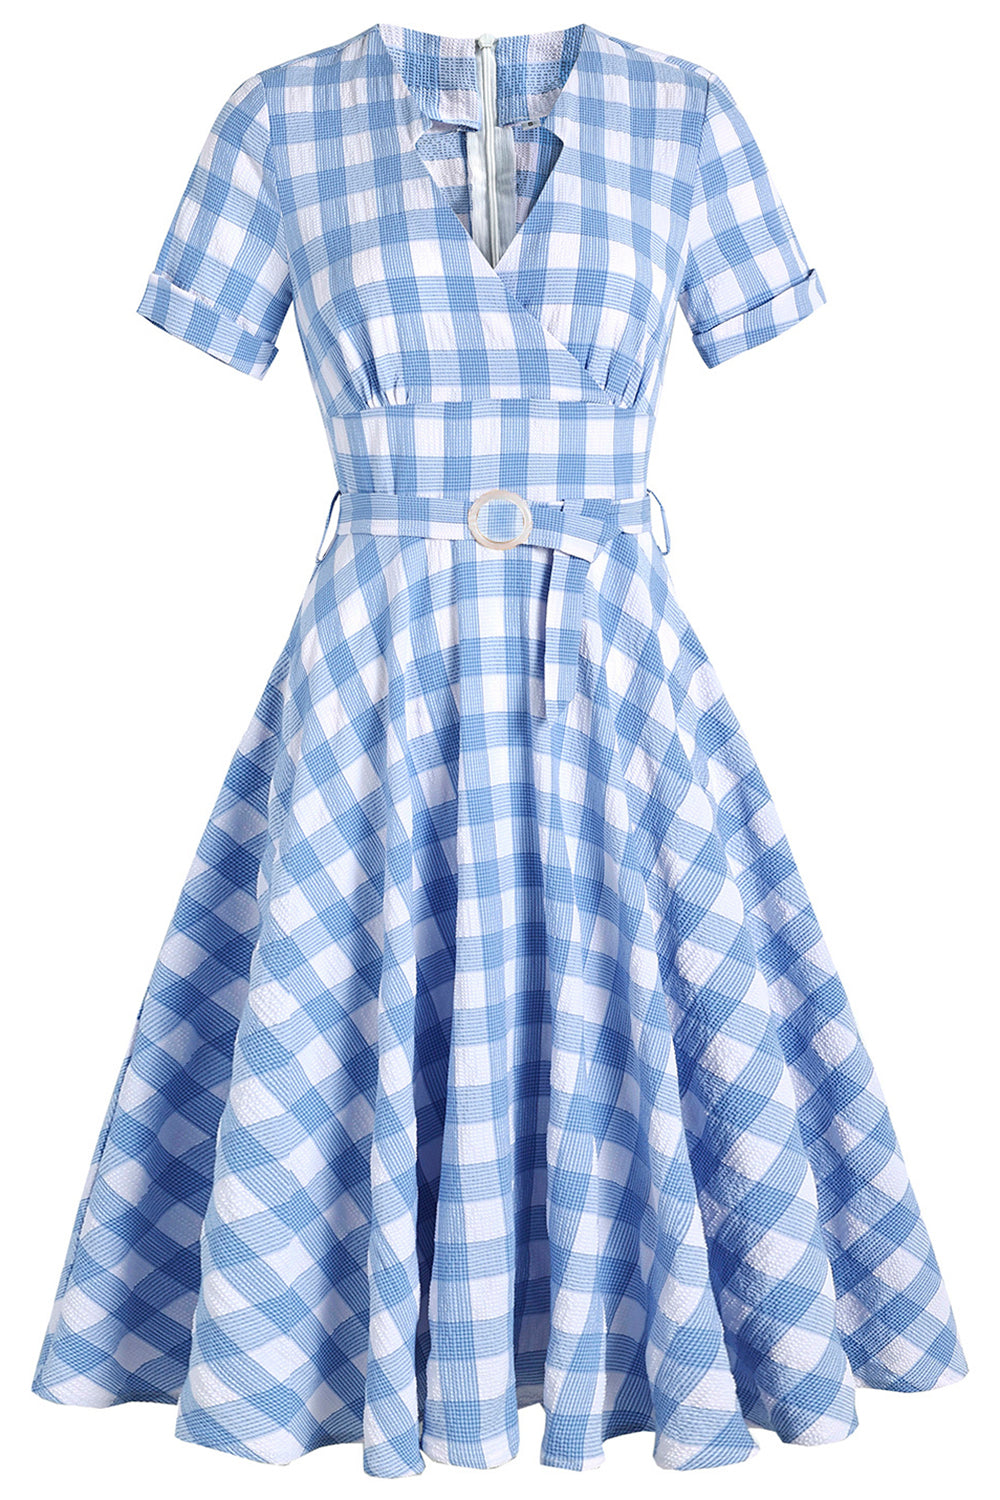 Vinatge Blue Plaid 1950s Dress